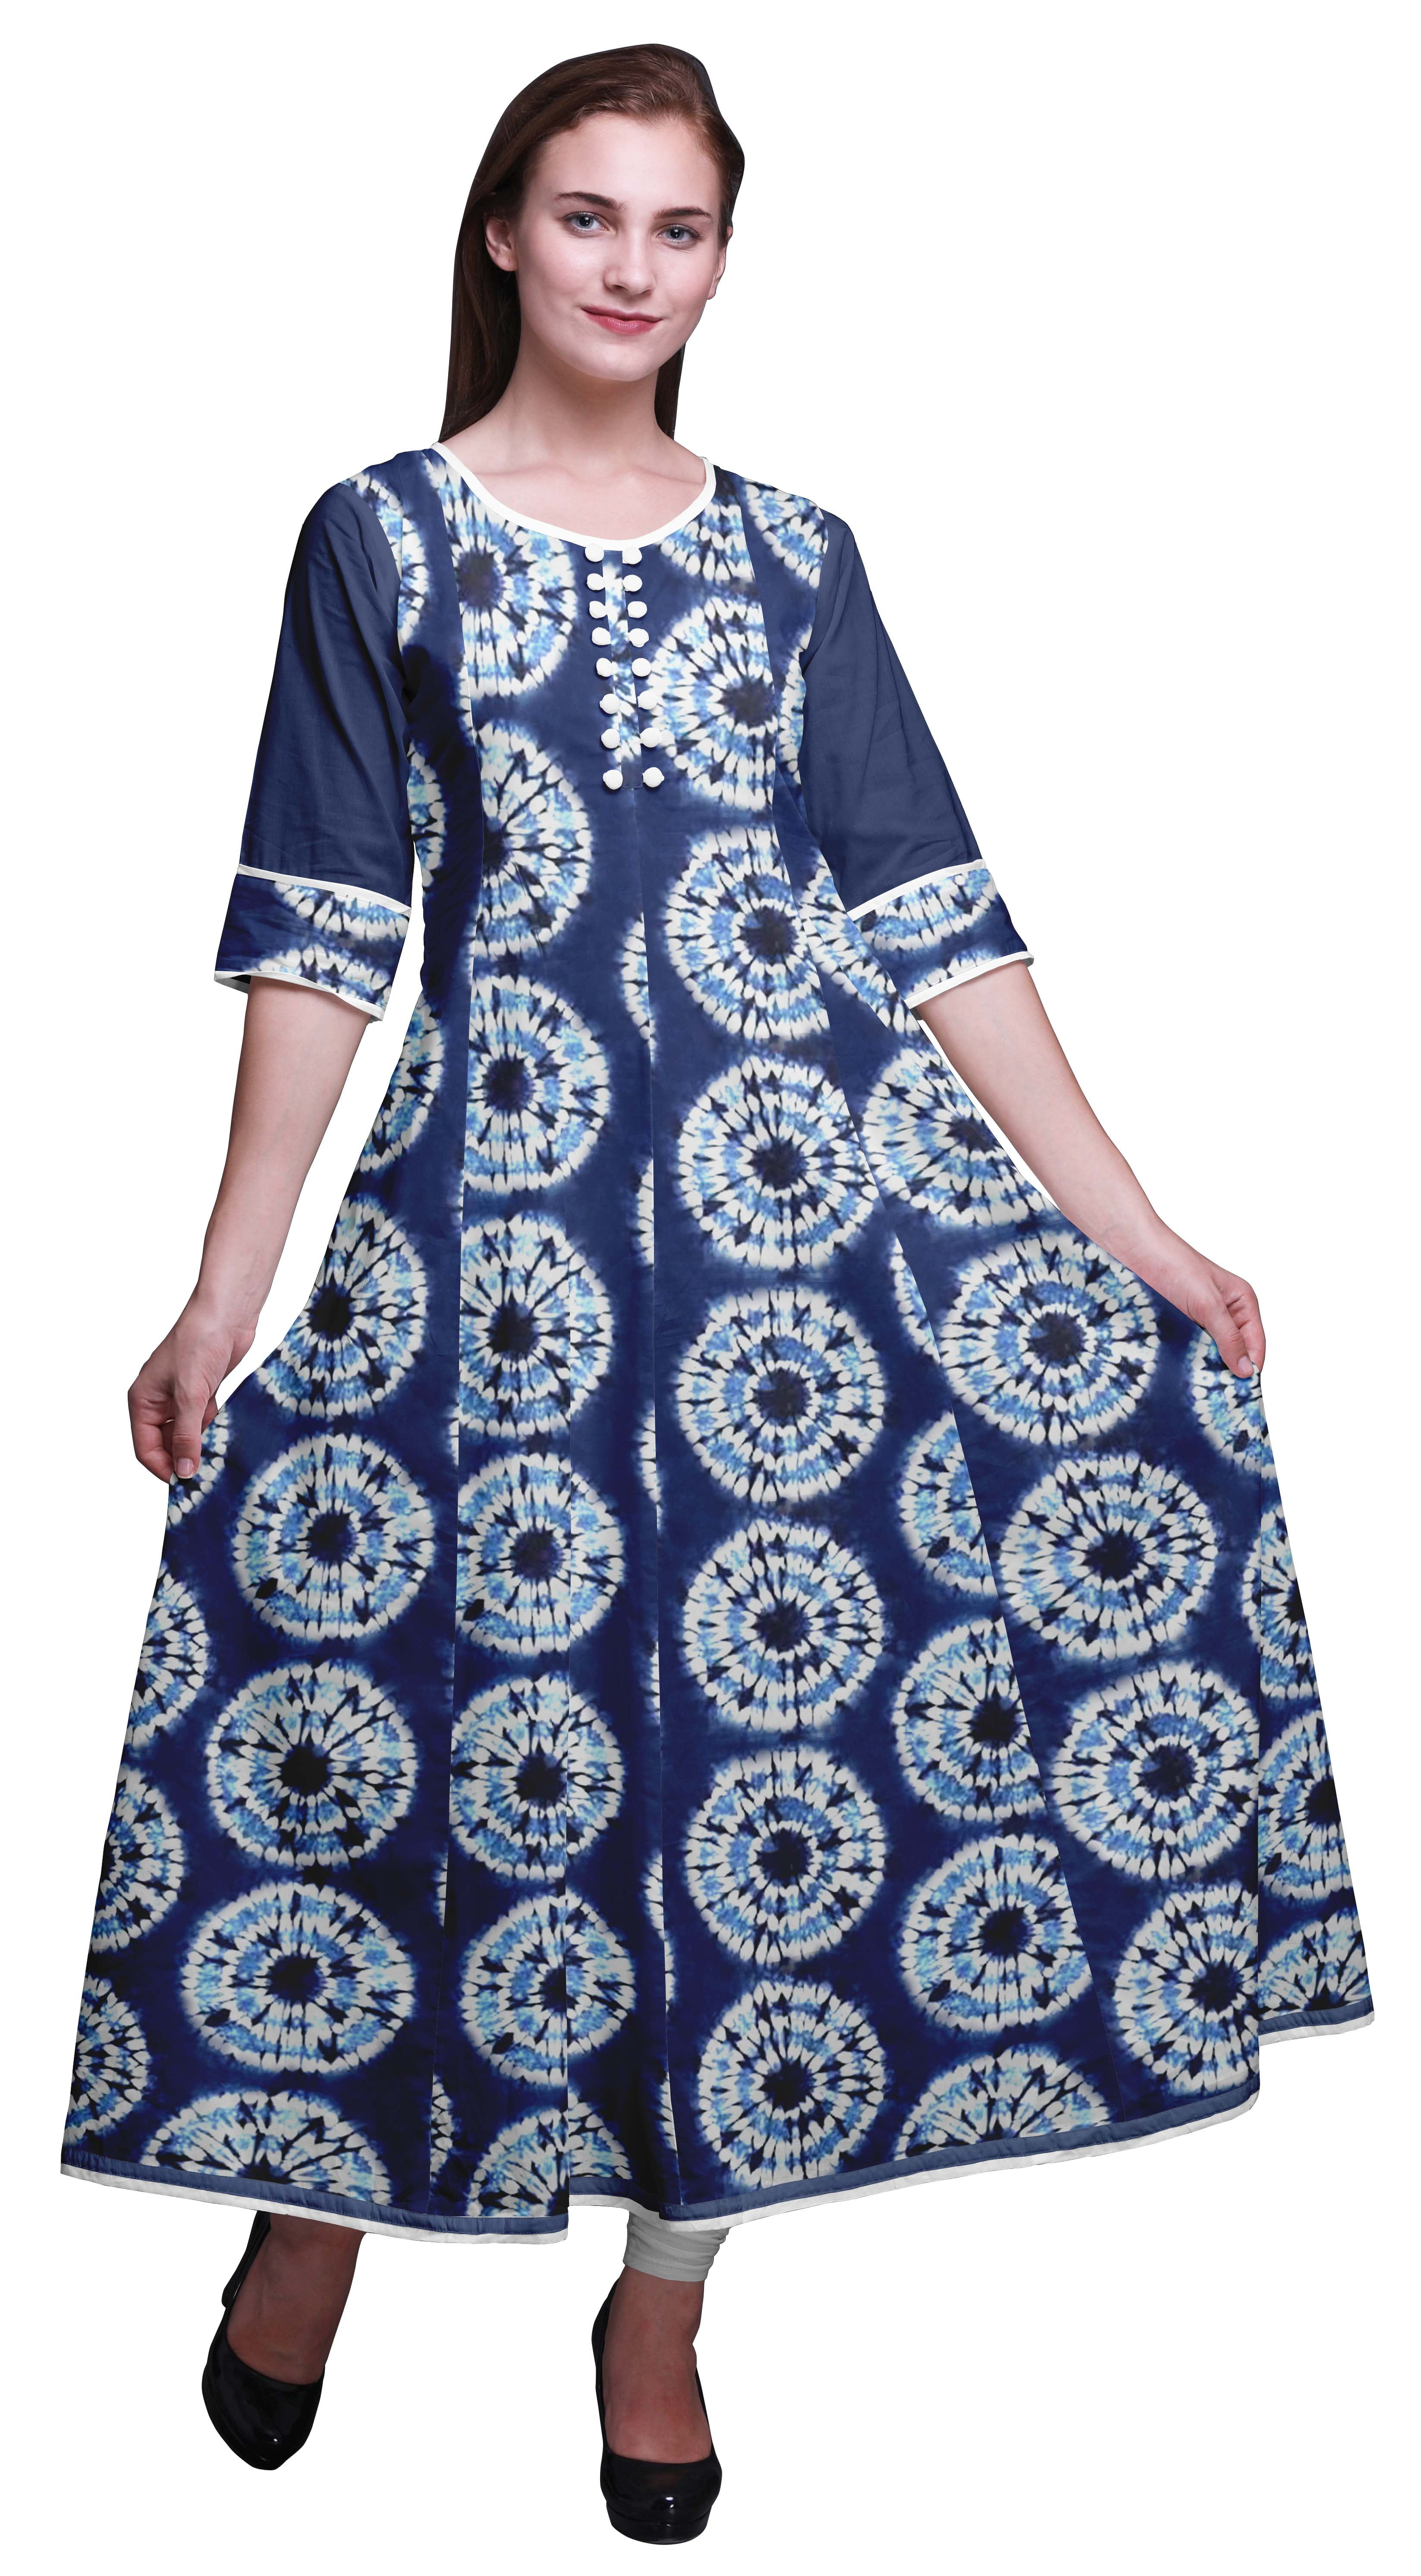 Details about   Indian Women Kurti Kurta Ethnic Designer Top Tunic Anarkali Long Maxi Dress 